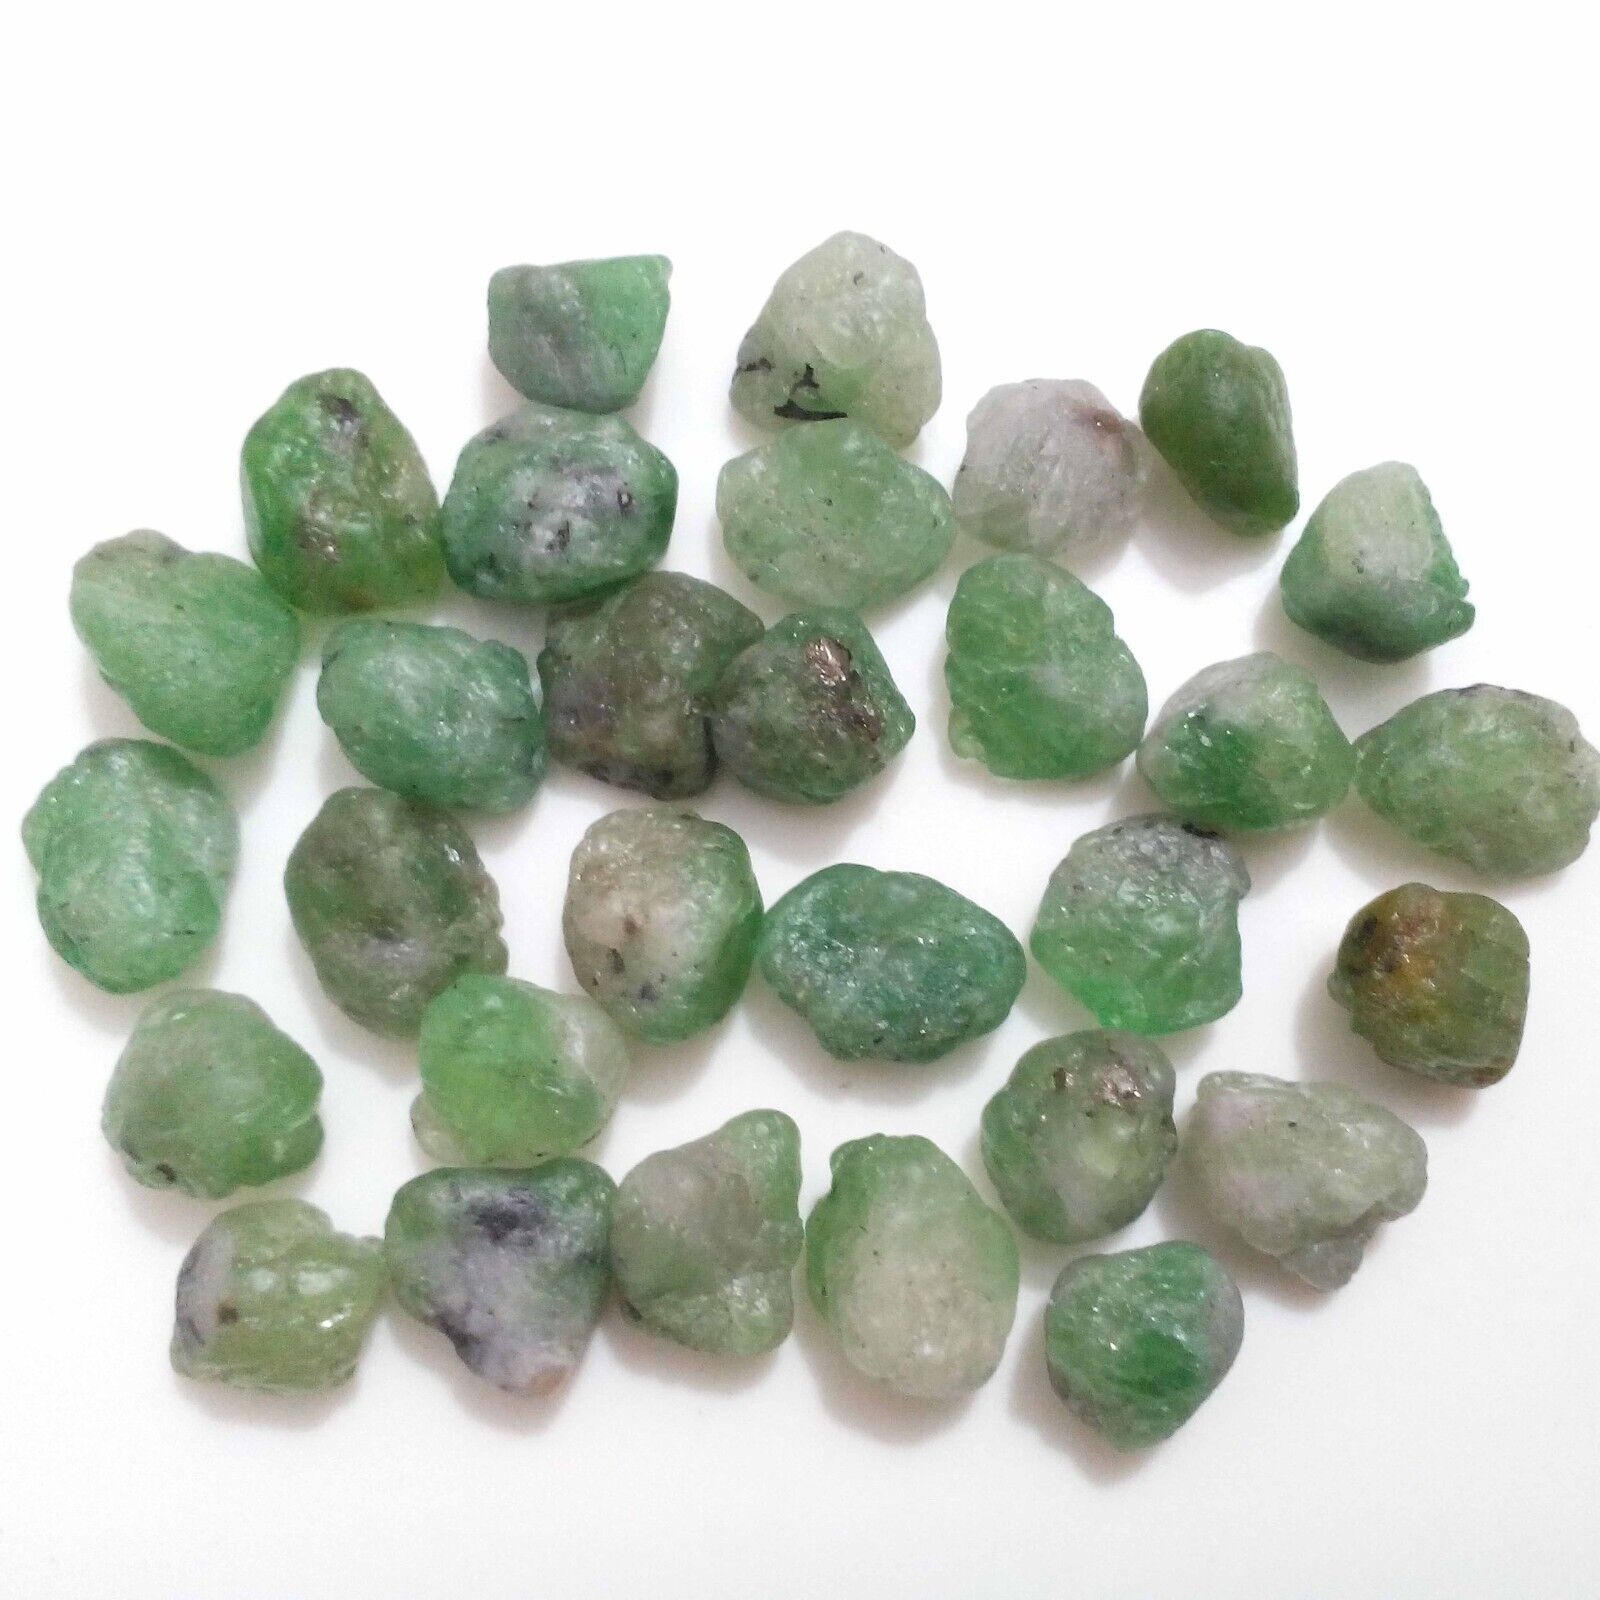 Amazing Earth Mined Tsavorite Green Garnet 30 Pcs Size 10-12 MM Rough Gemstone